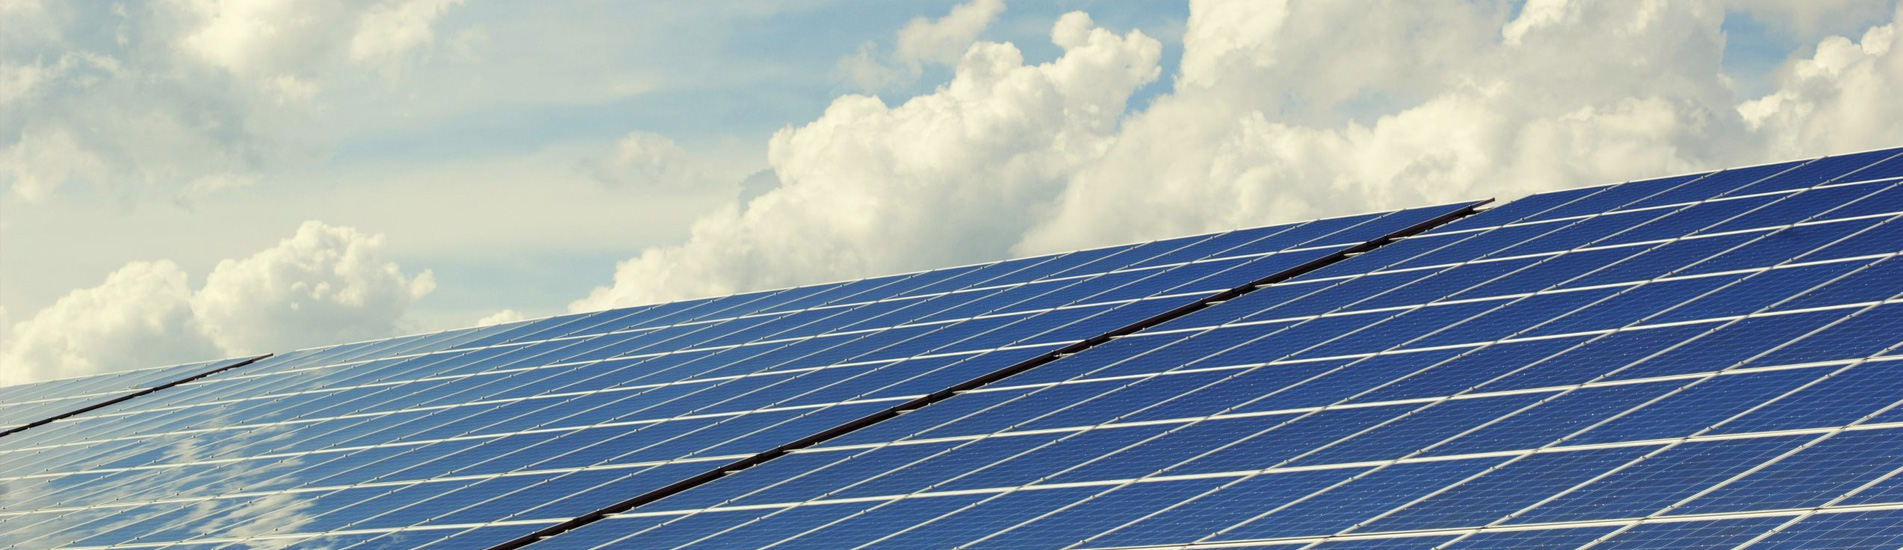 Solar Companies In Bahrain | Sustainability In Bahrain | Sustainability Report Bahrain